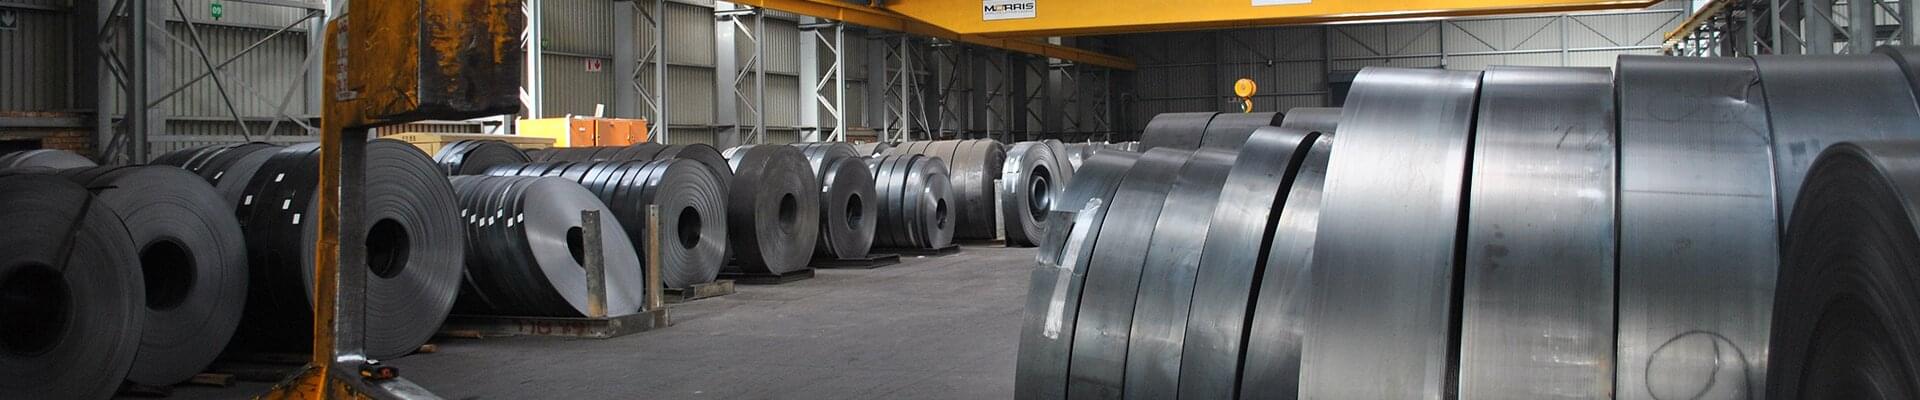 ABUS Krane in der Stahlrohrfirma Africa Steel and Tube